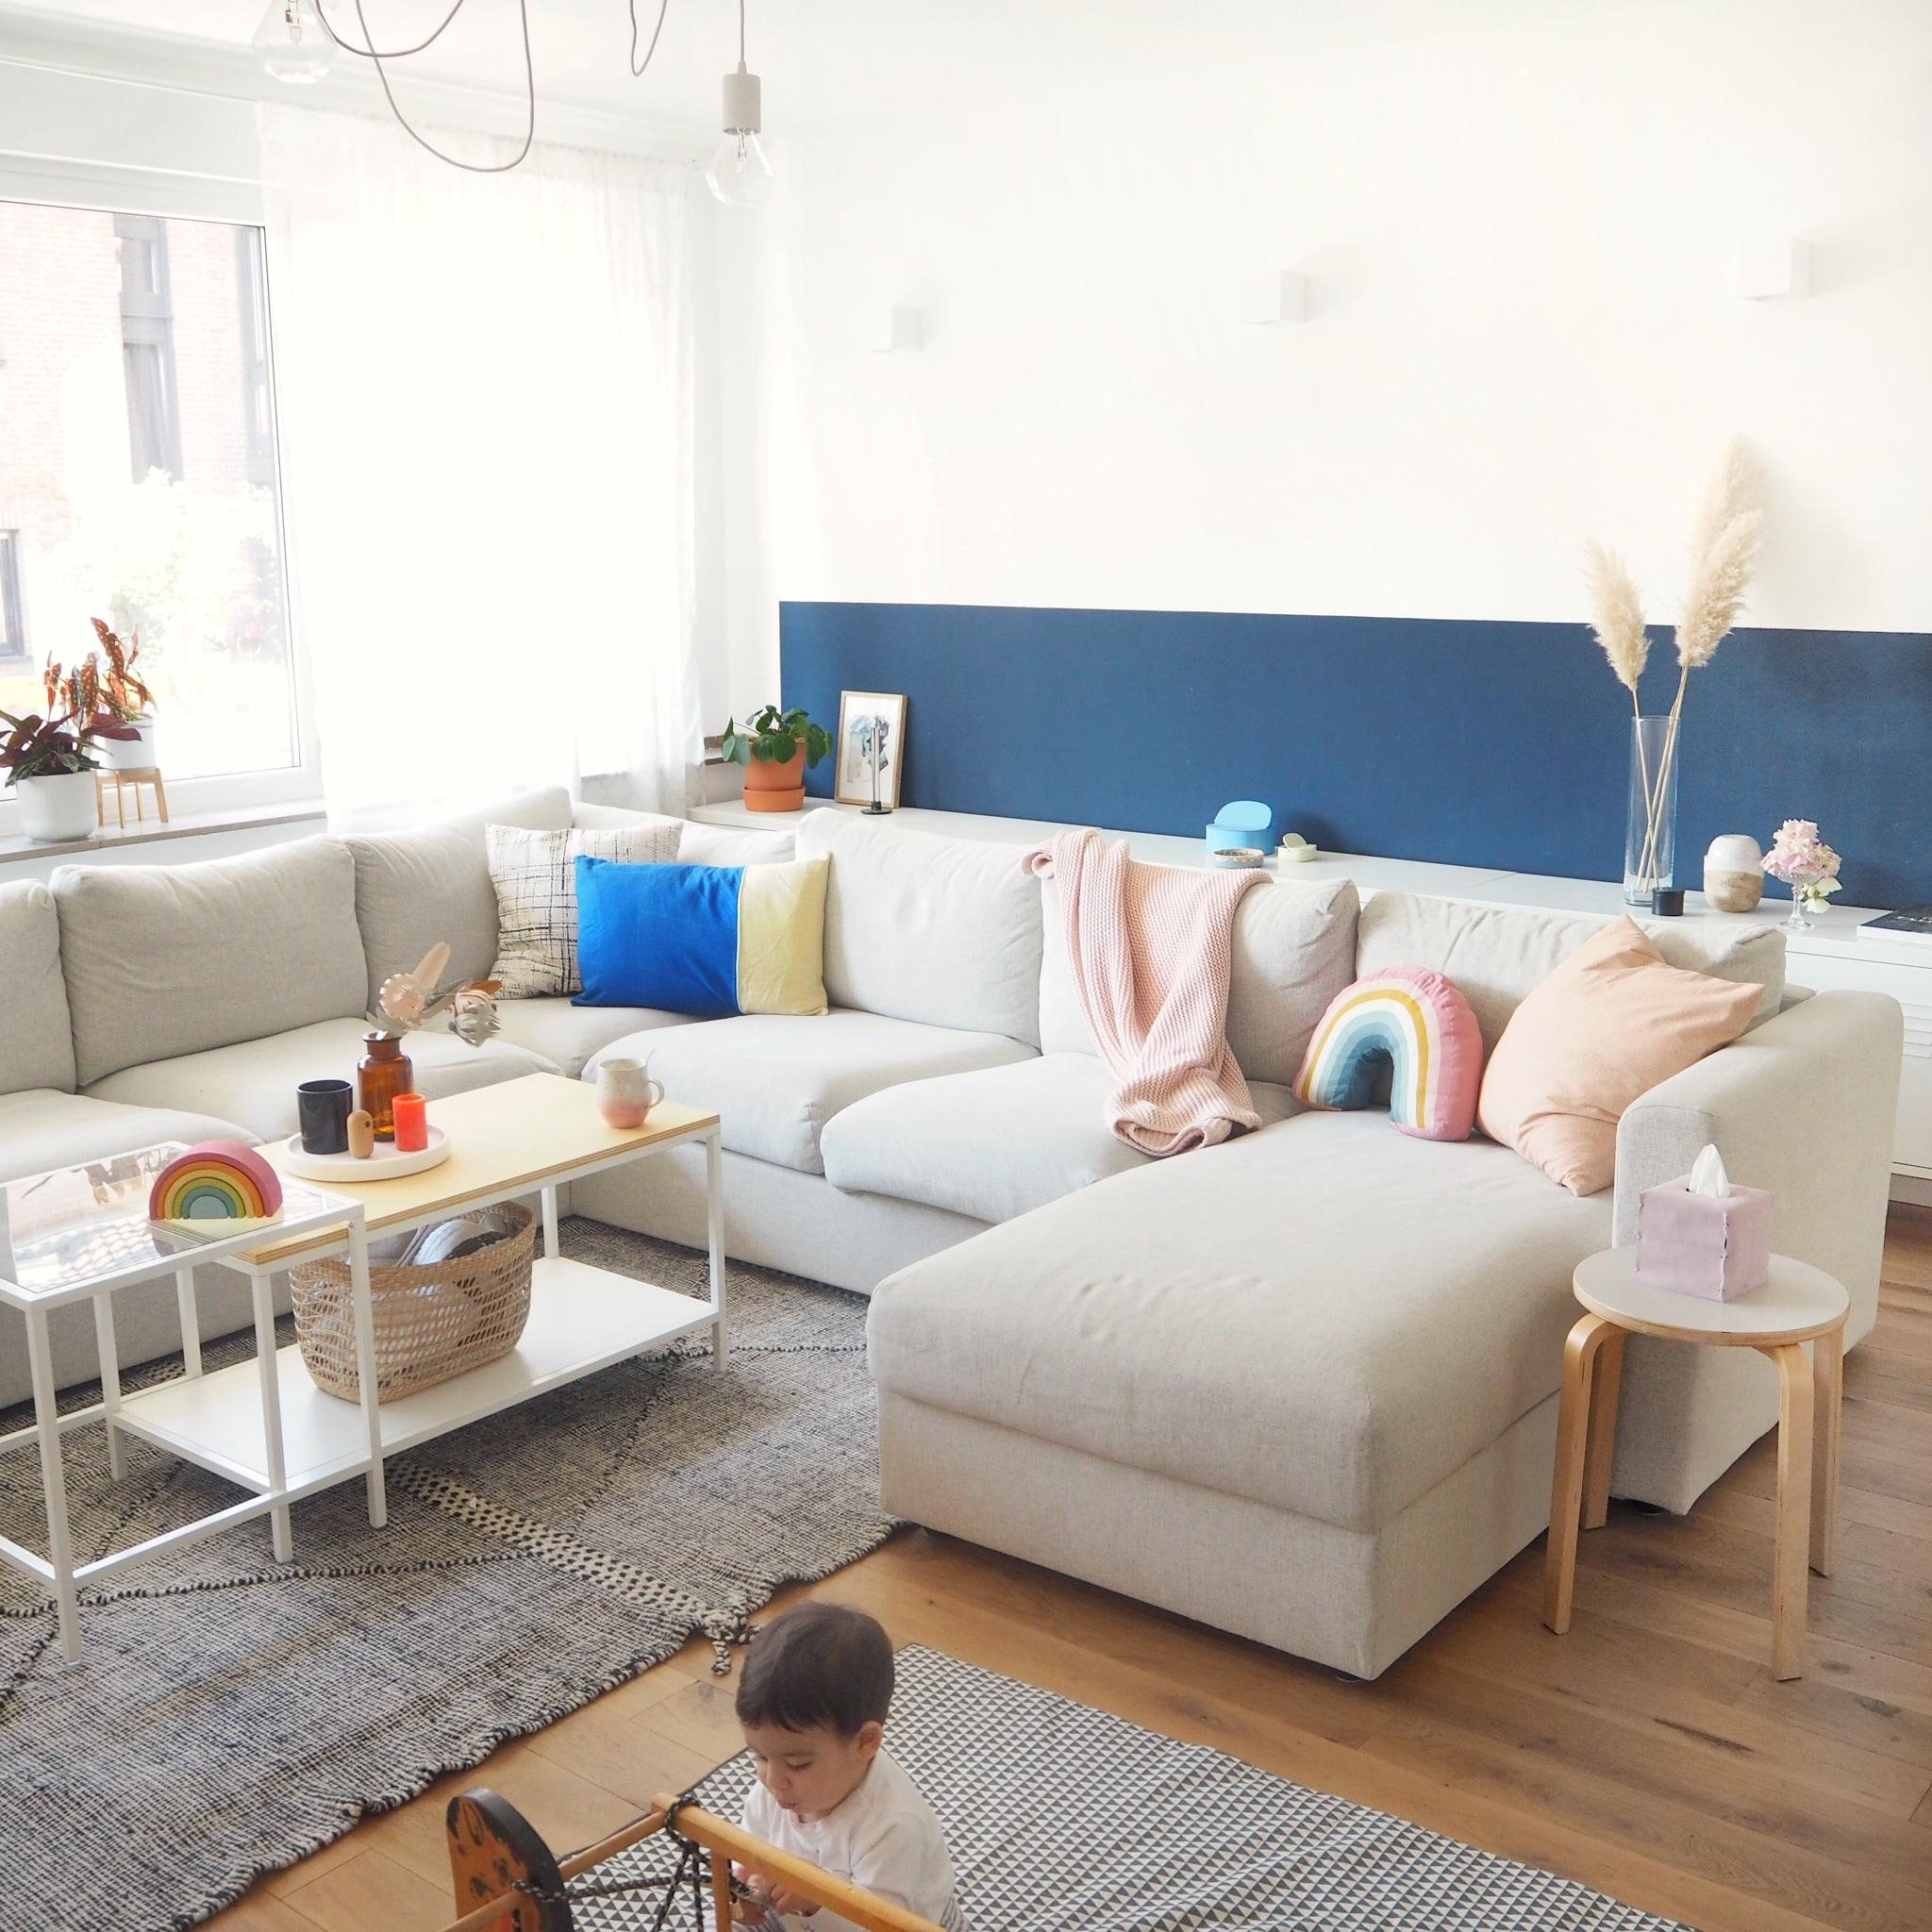 #wohnzimmer #livingroom #couchstyle #familiencouch